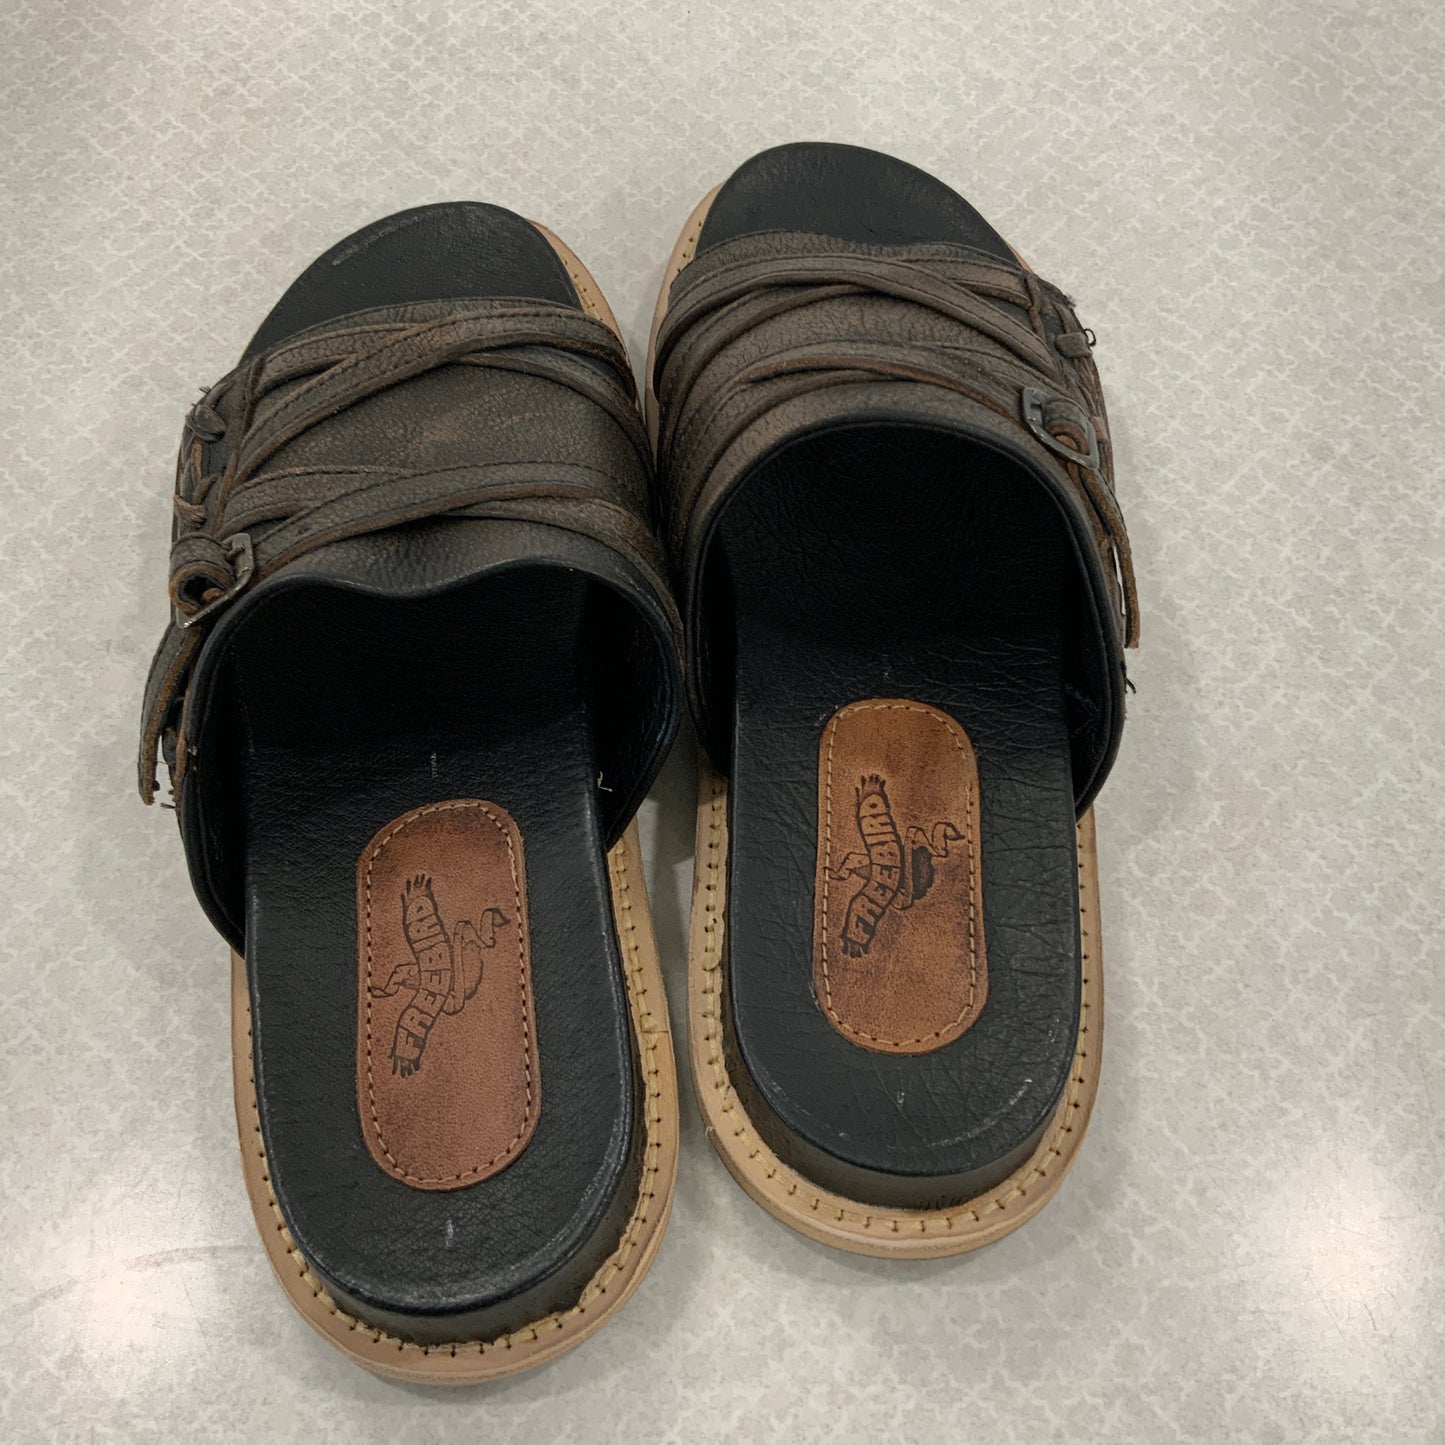 Sandals Flats By Freebird  Size: 8